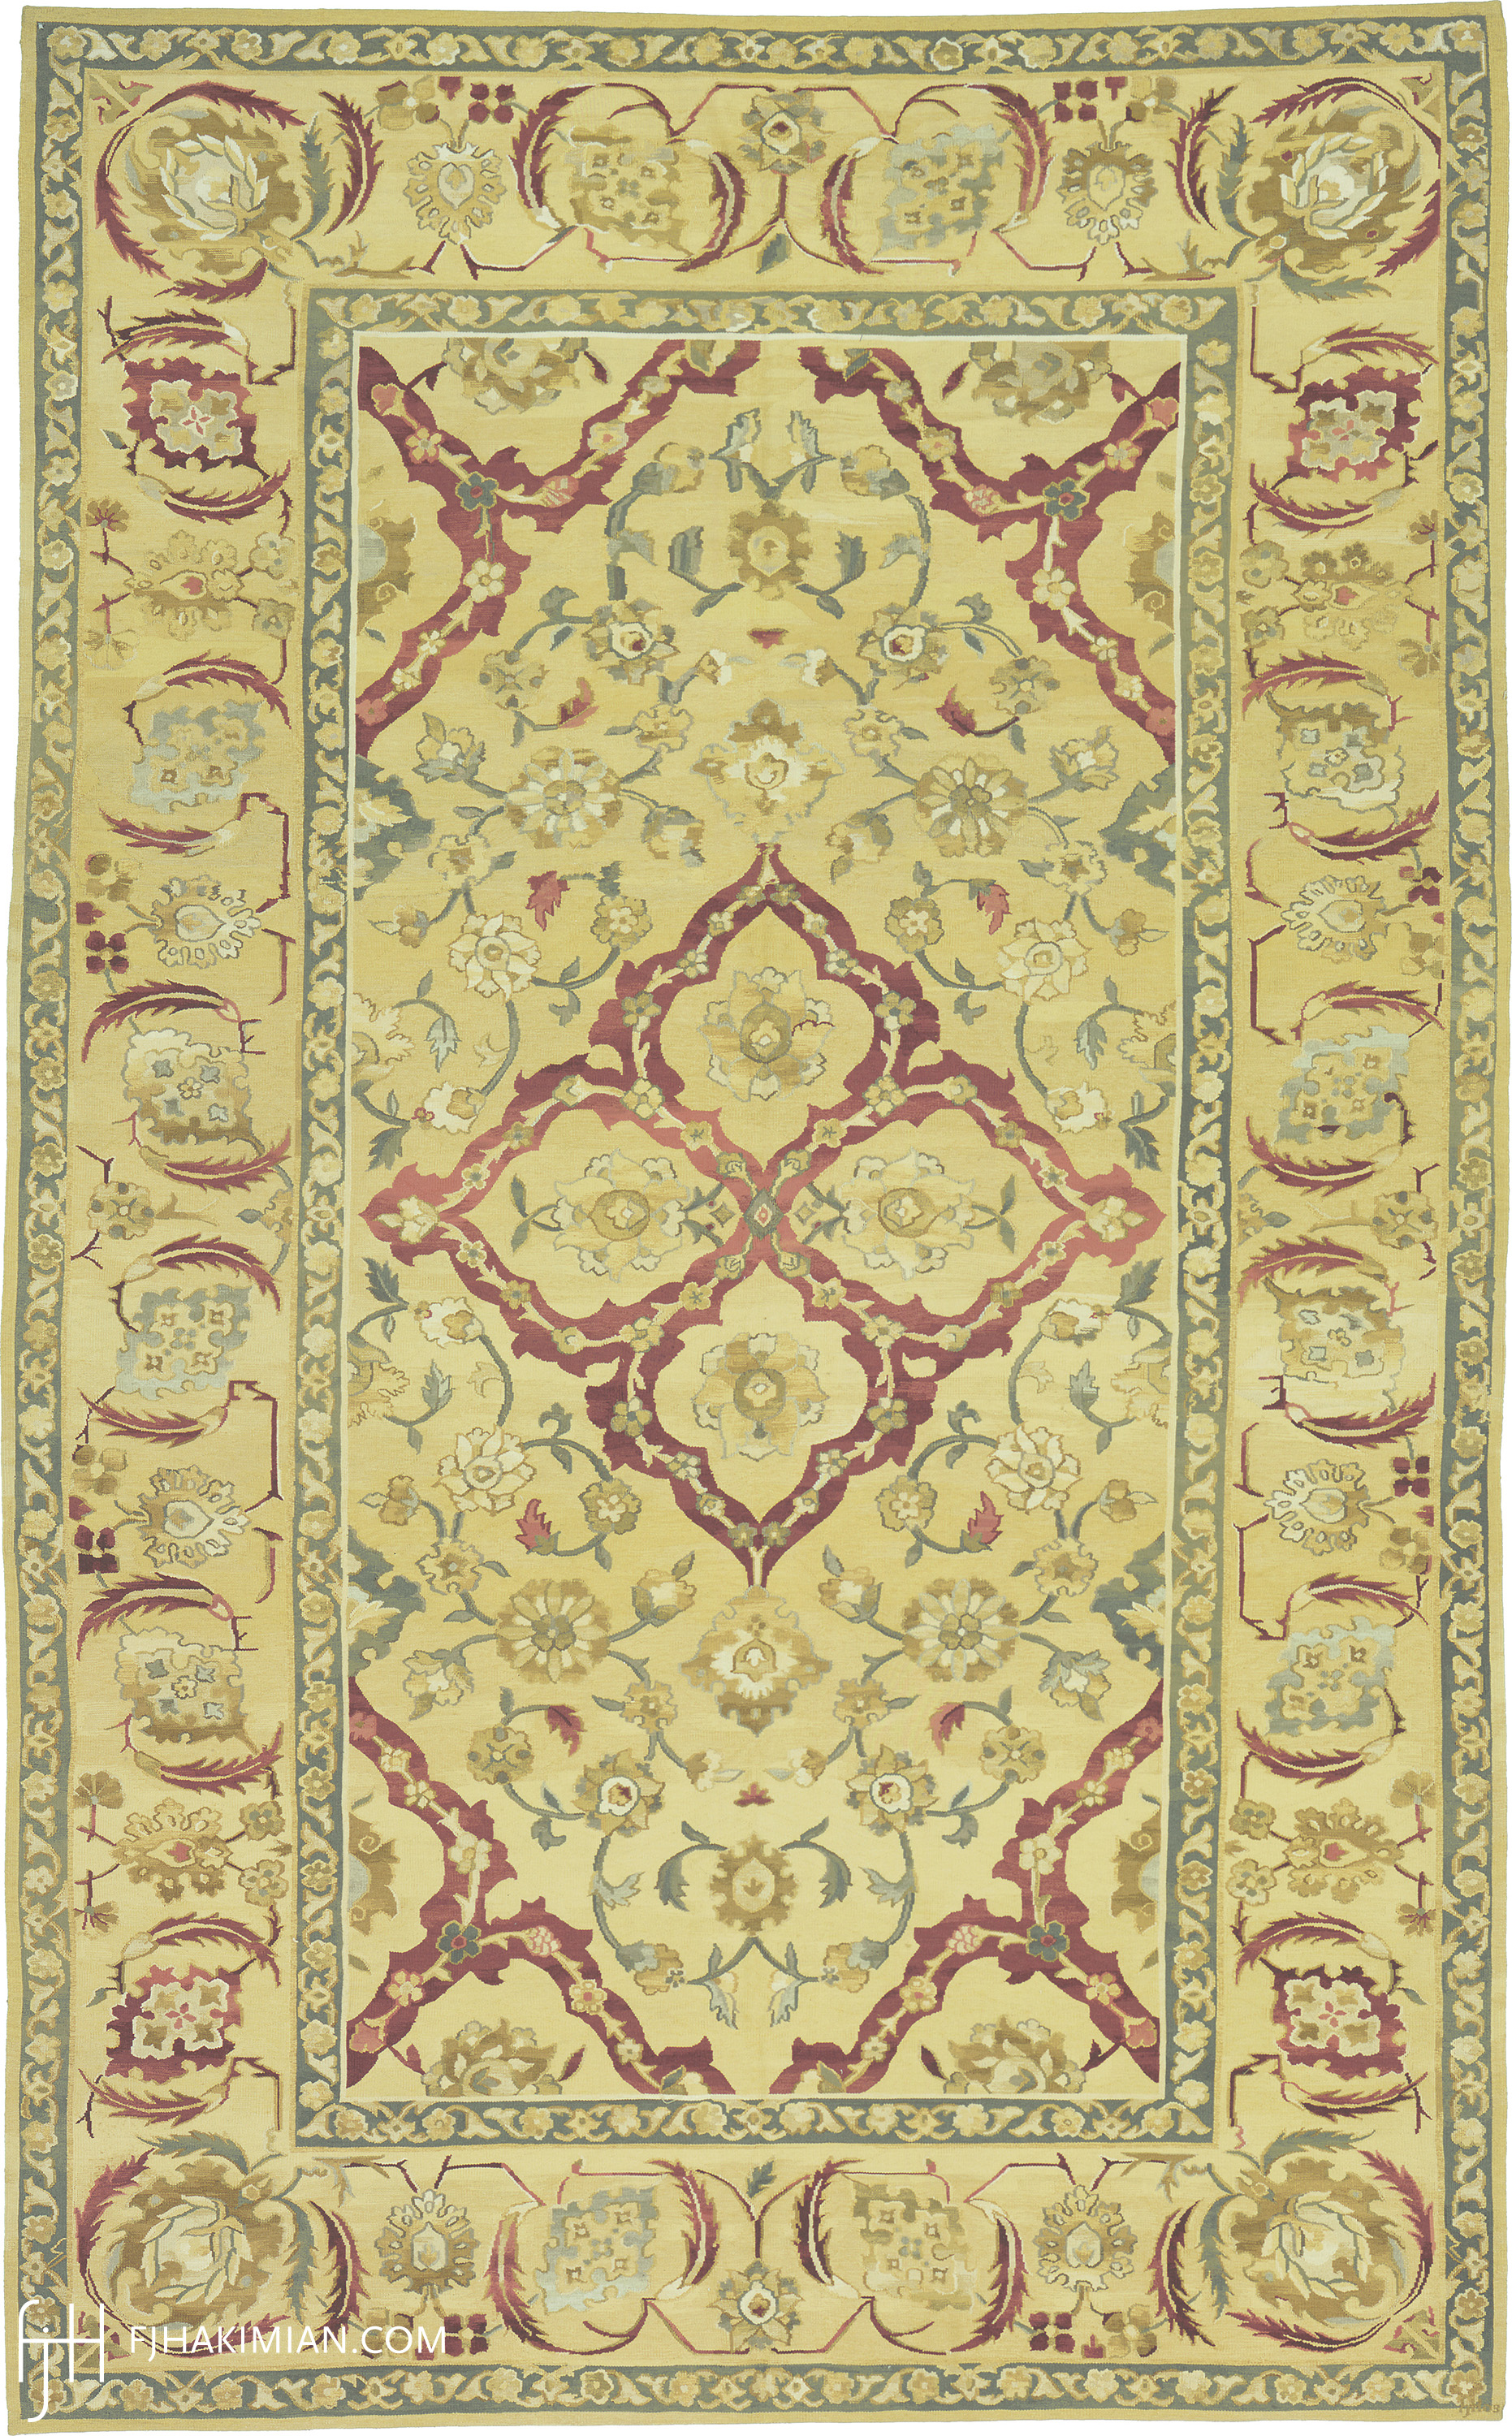 Custom Bardini Design | FJ Hakimian | Carpet Gallery in NY